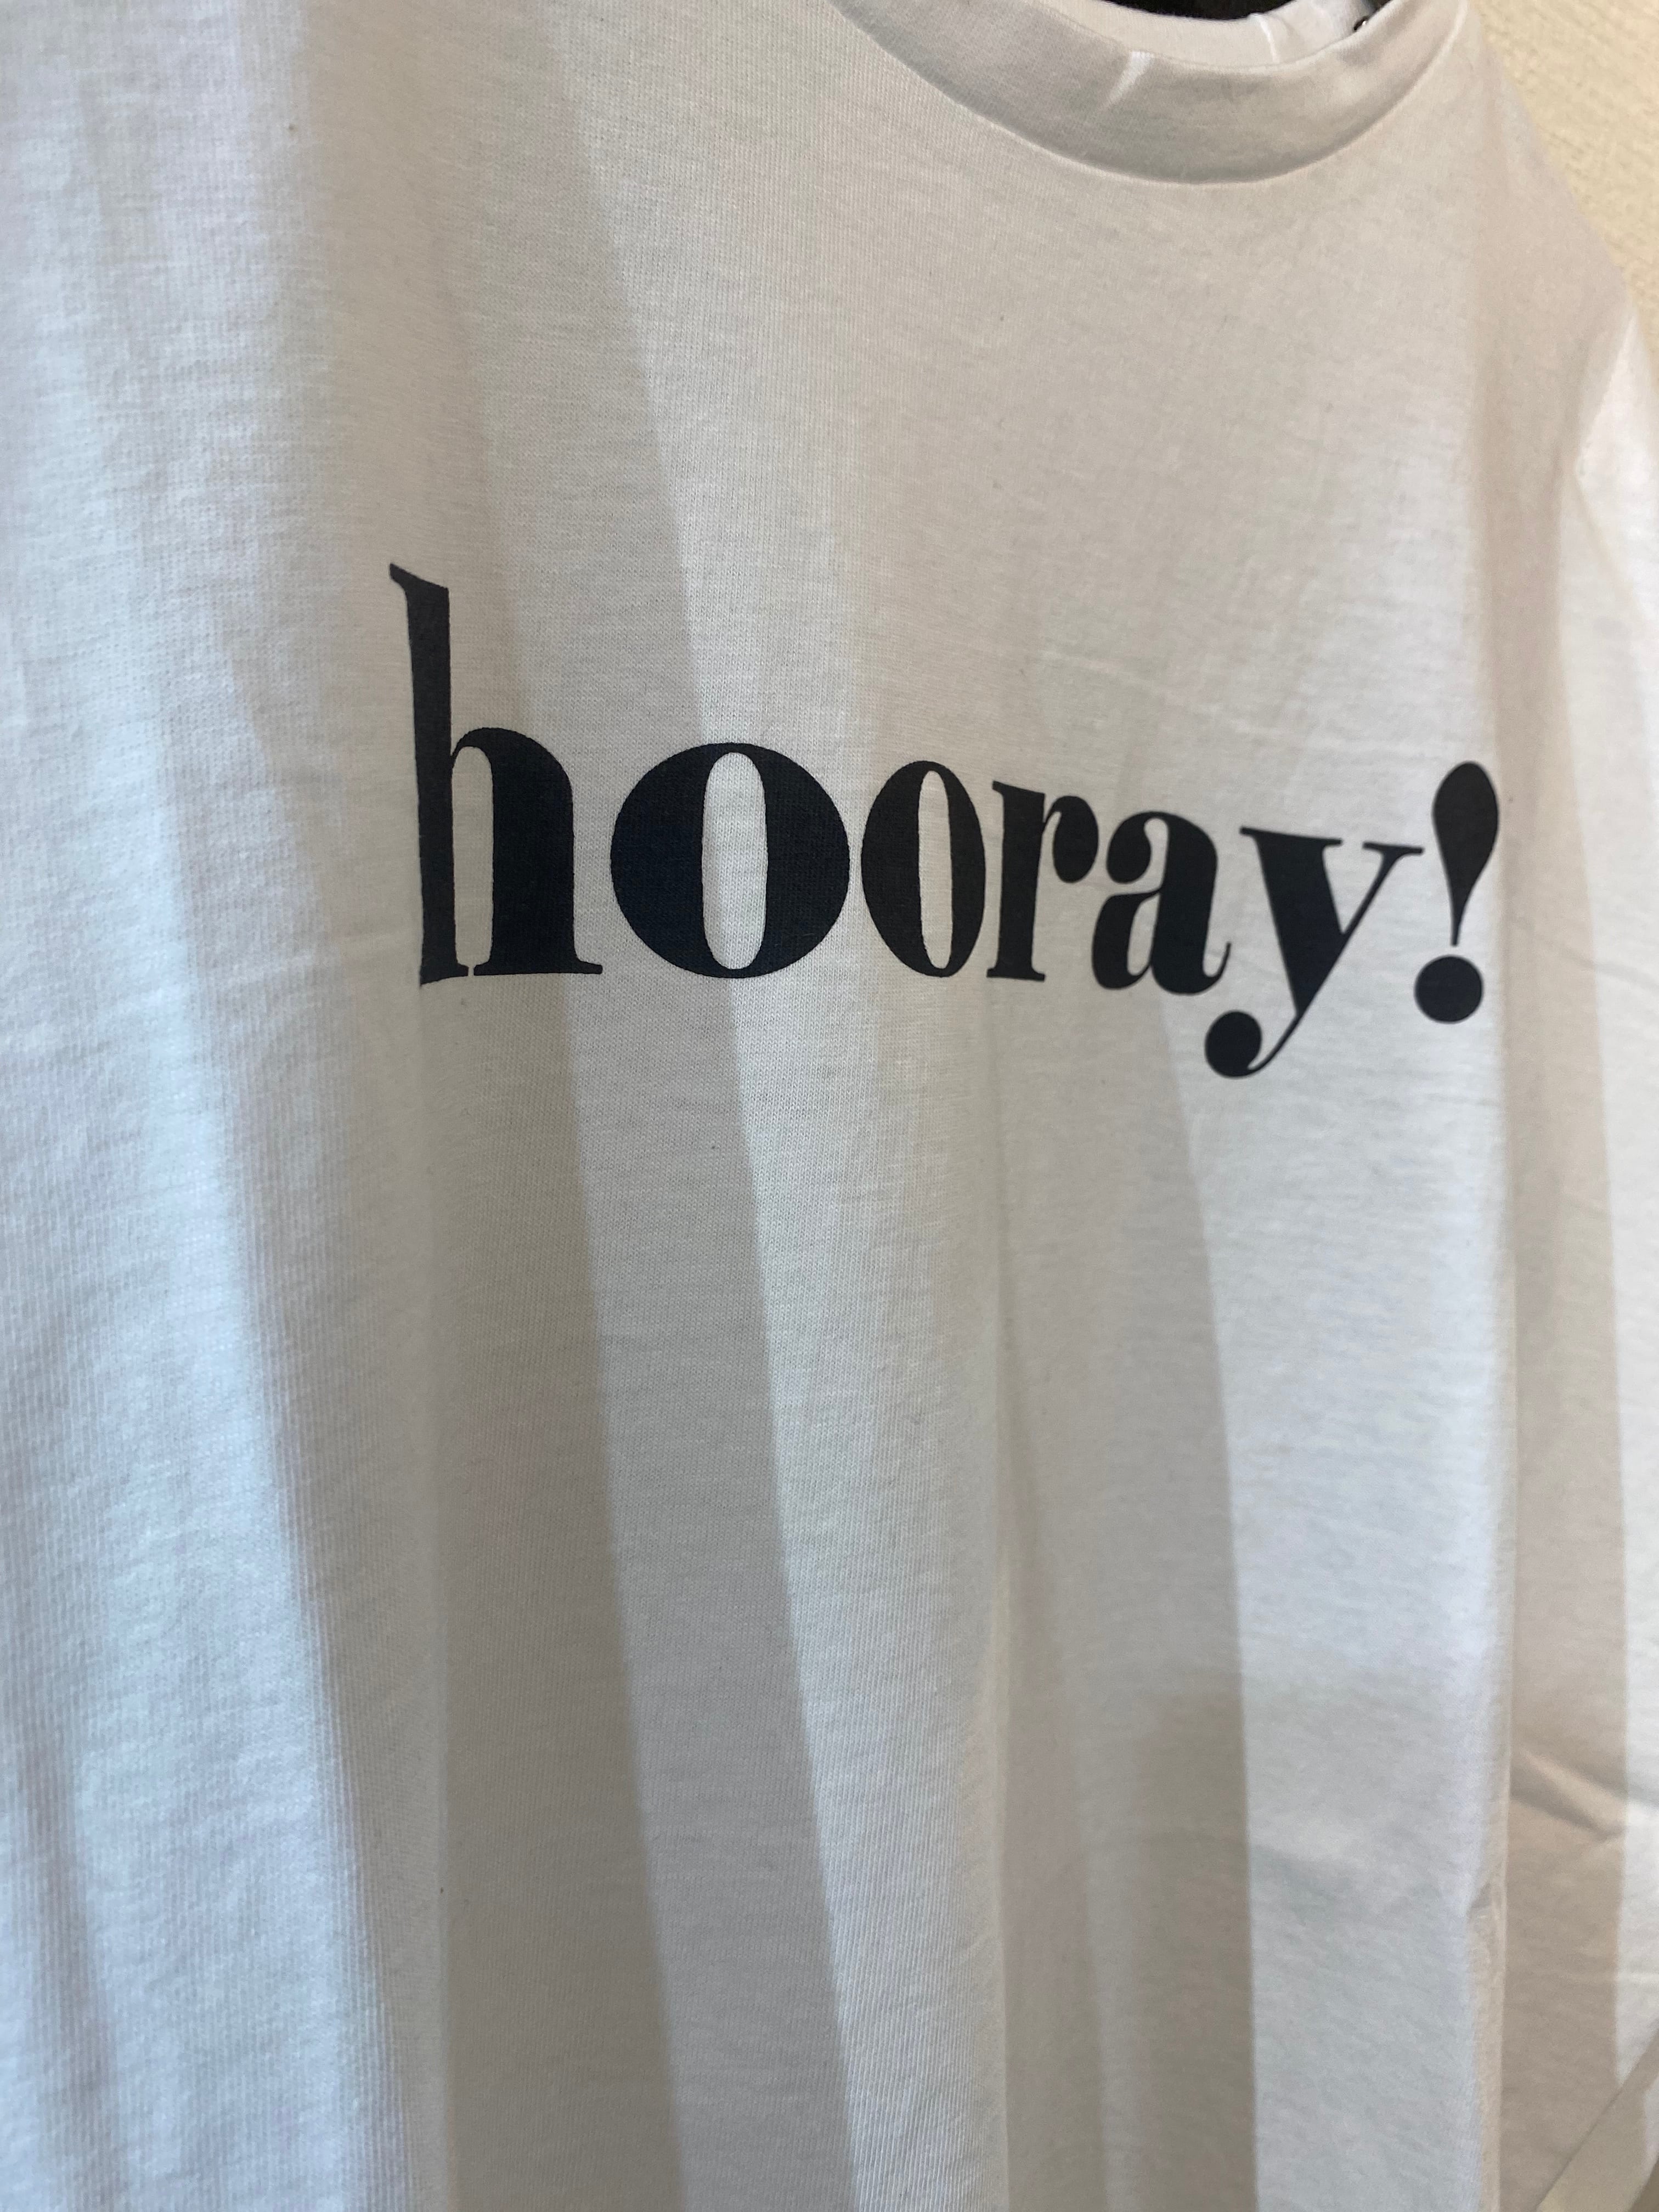 【Days】hooray!Tシャツ